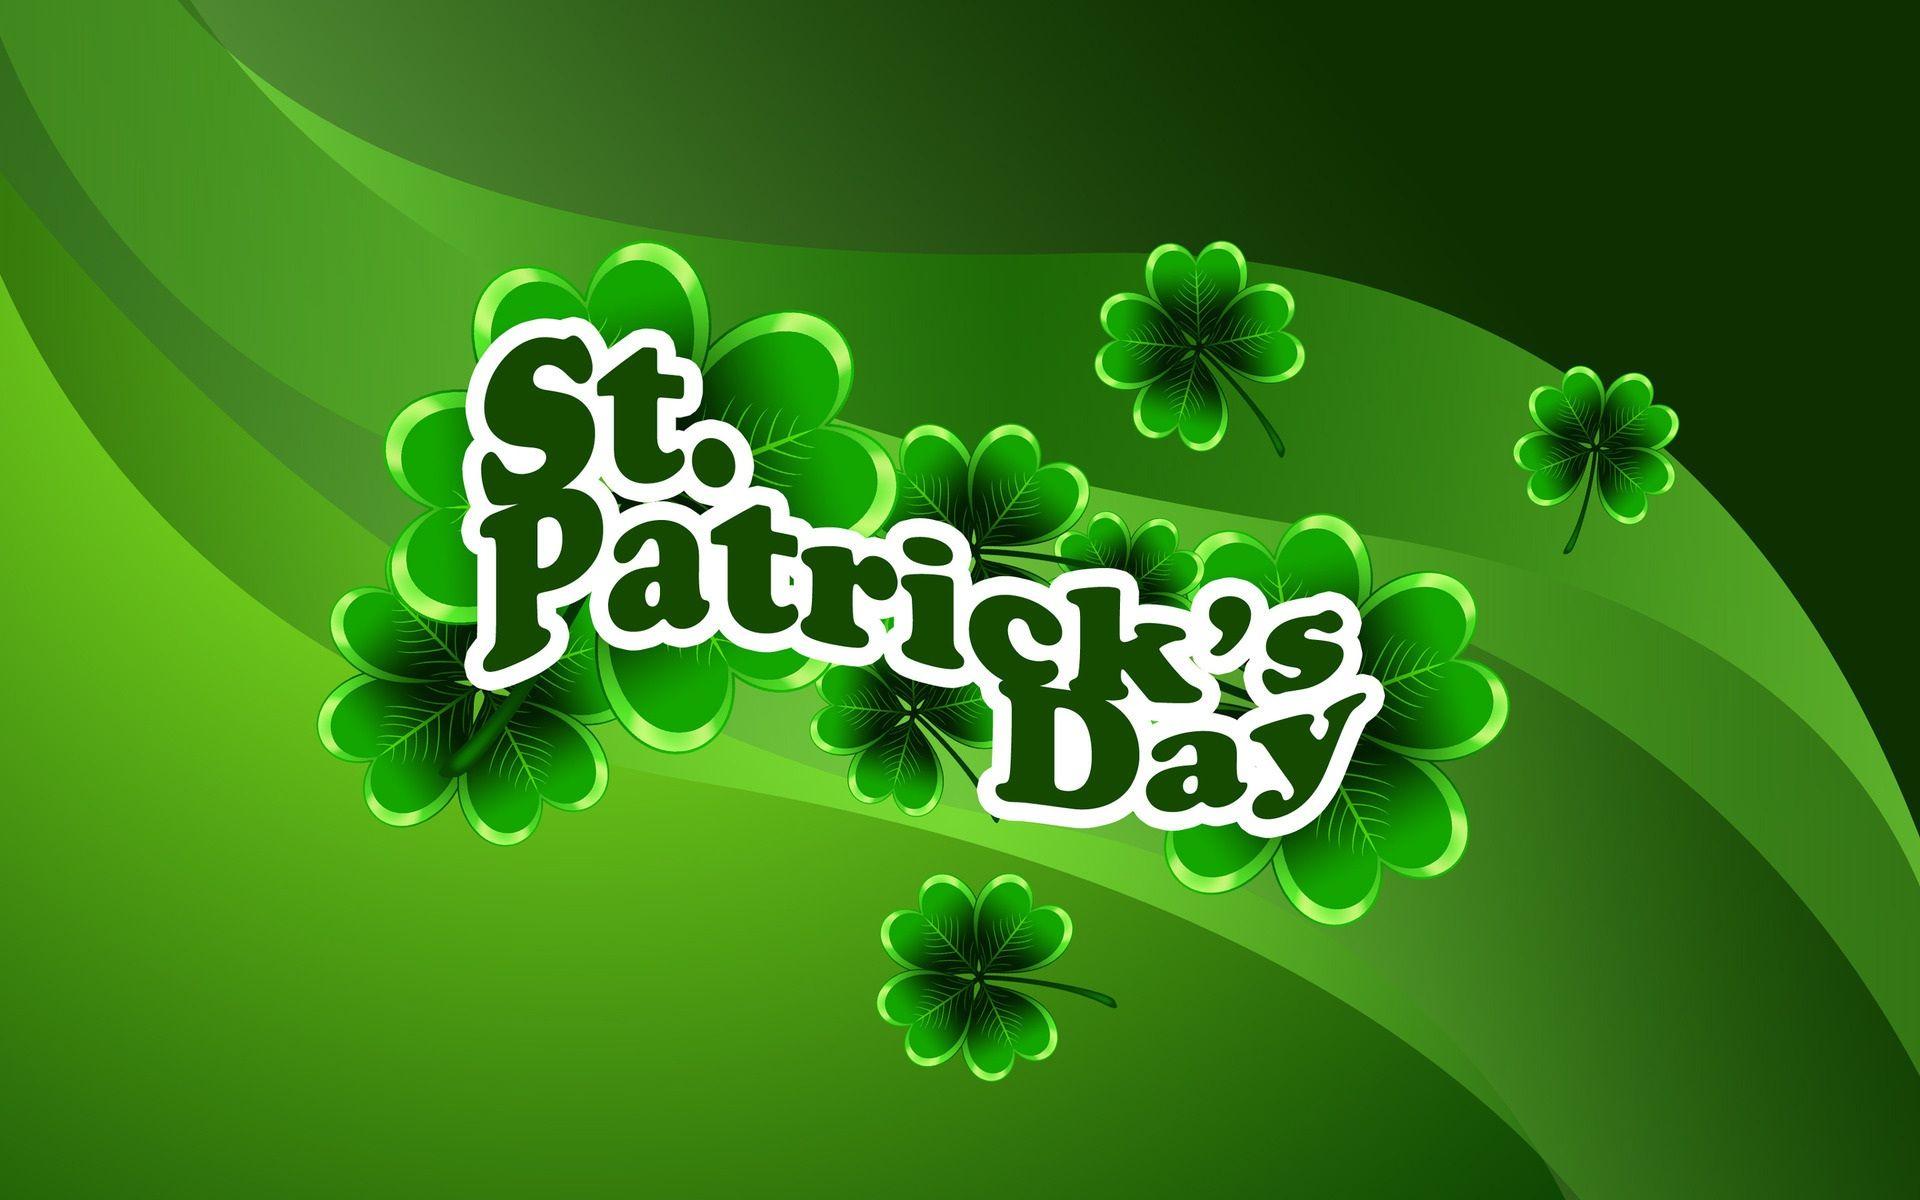 St Patrick's Day Pics Wallpaper HD Image